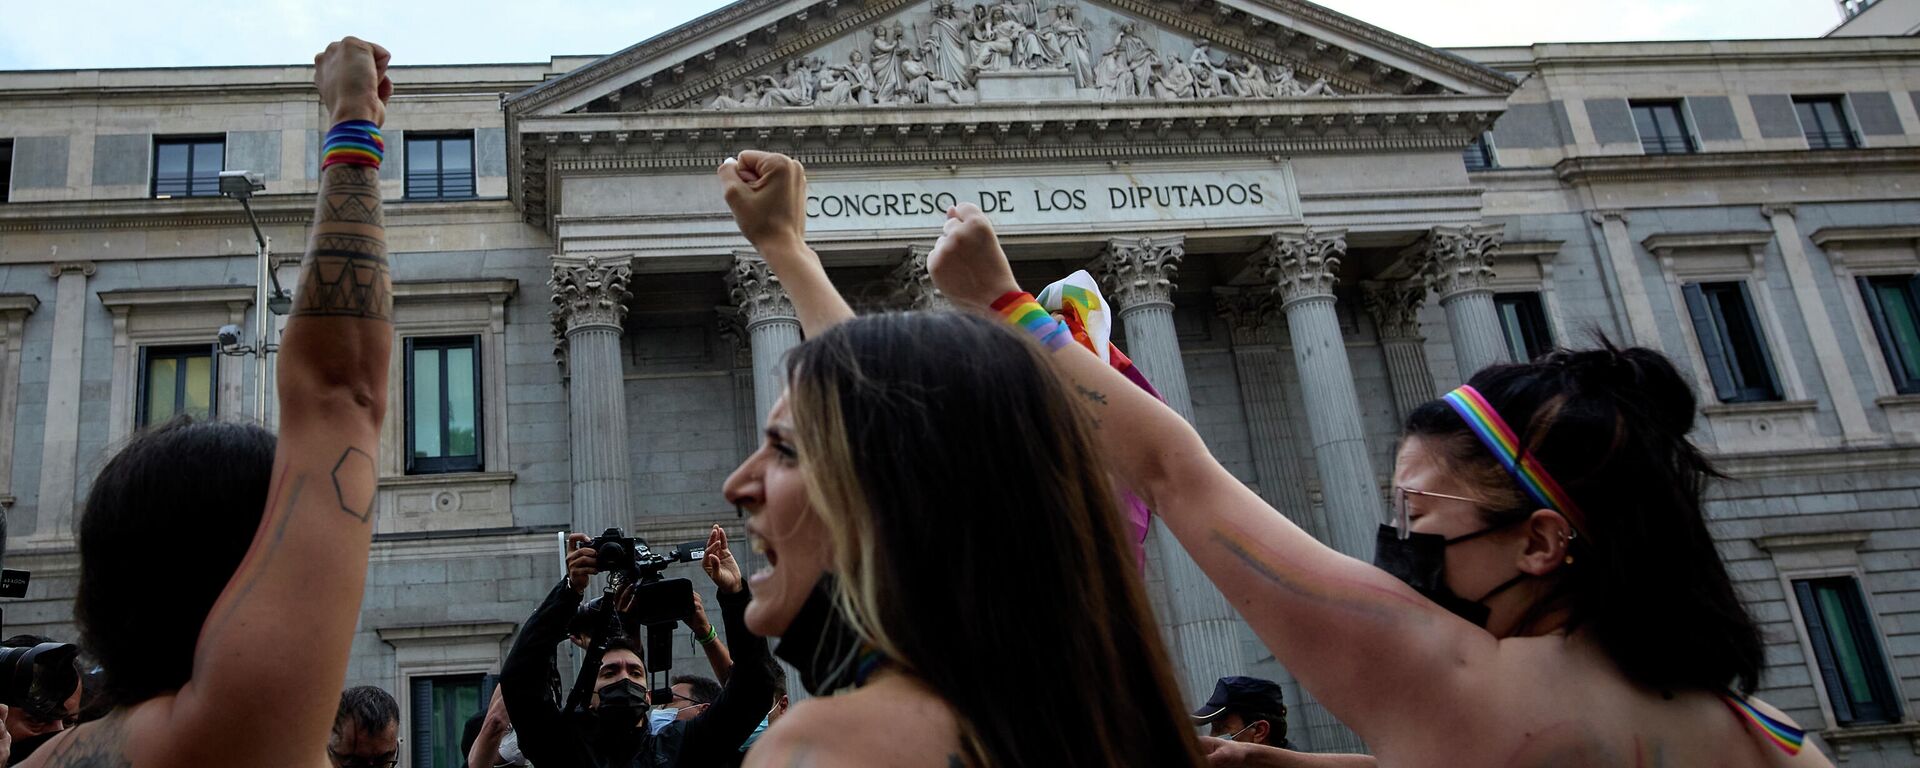 Femen se manifiesta contra la homofobia - Sputnik Mundo, 1920, 16.09.2021